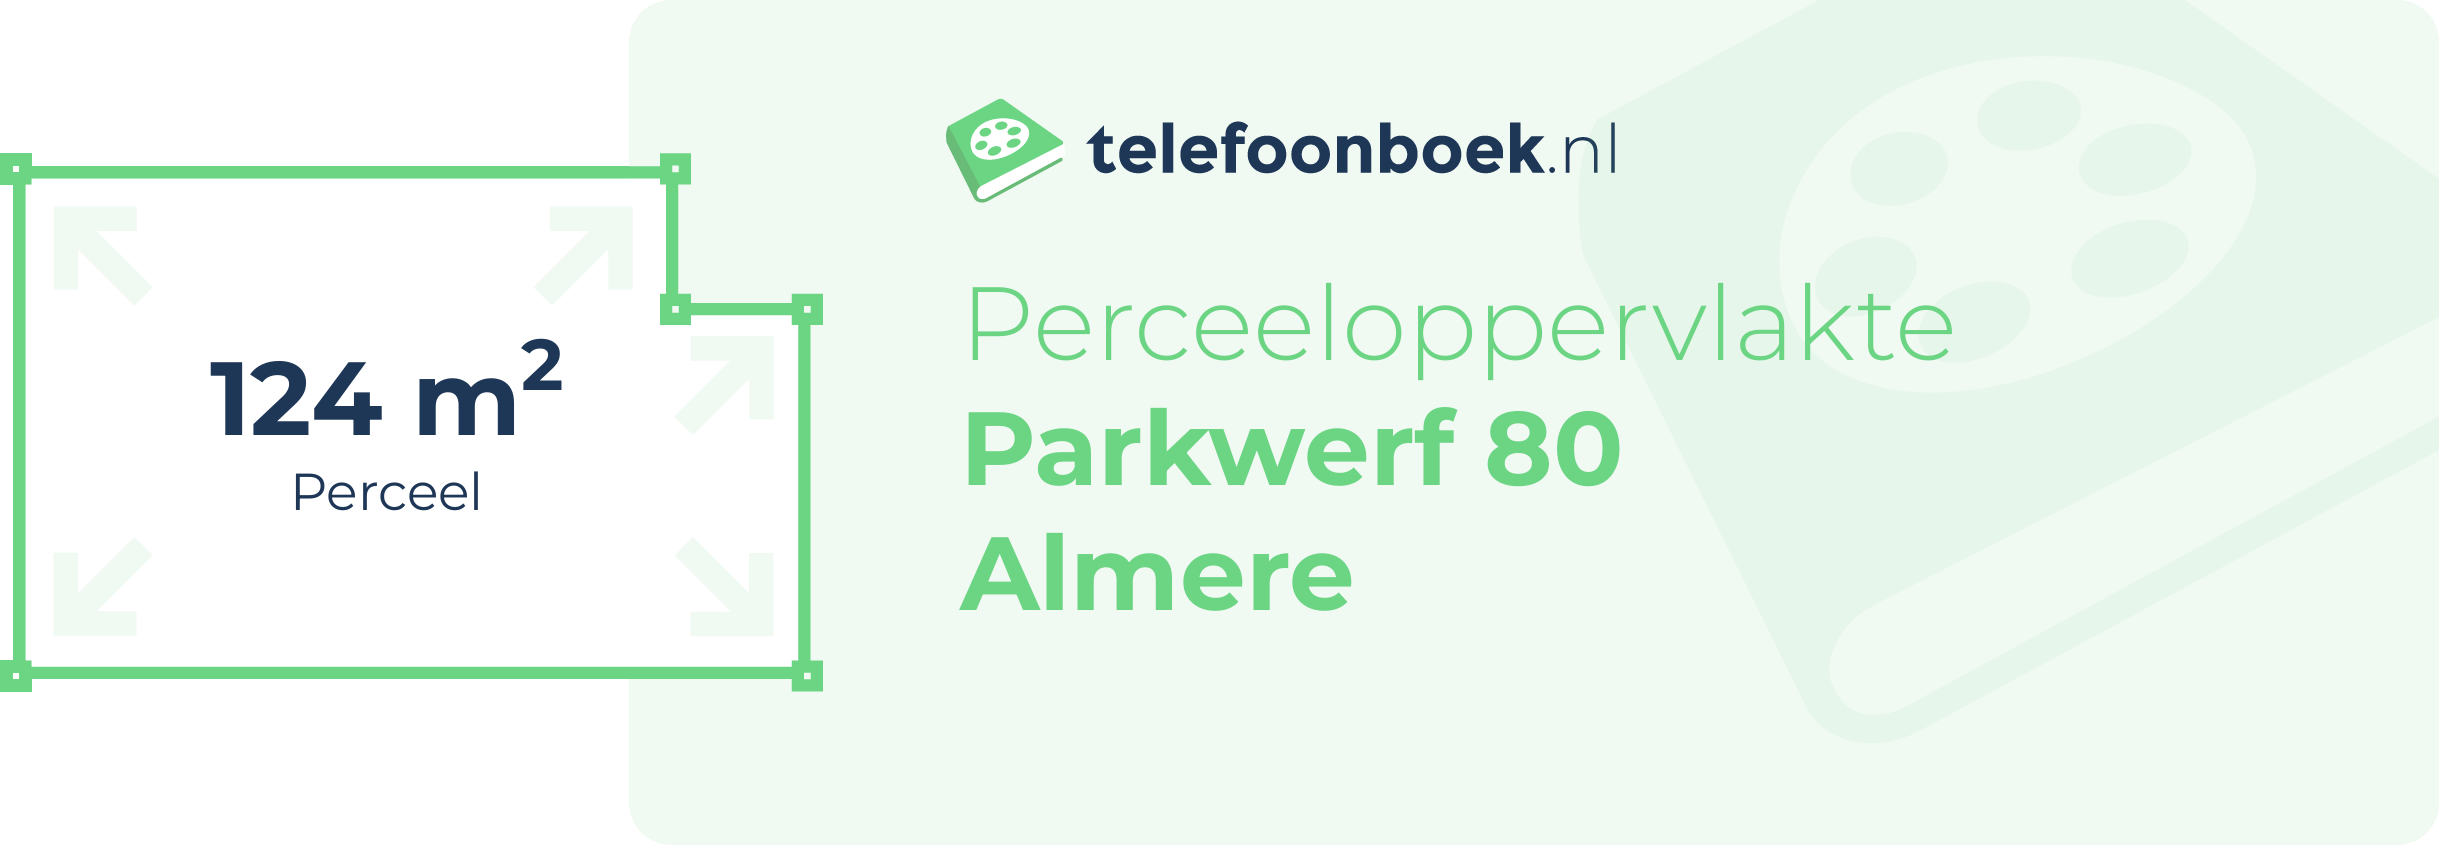 Perceeloppervlakte Parkwerf 80 Almere